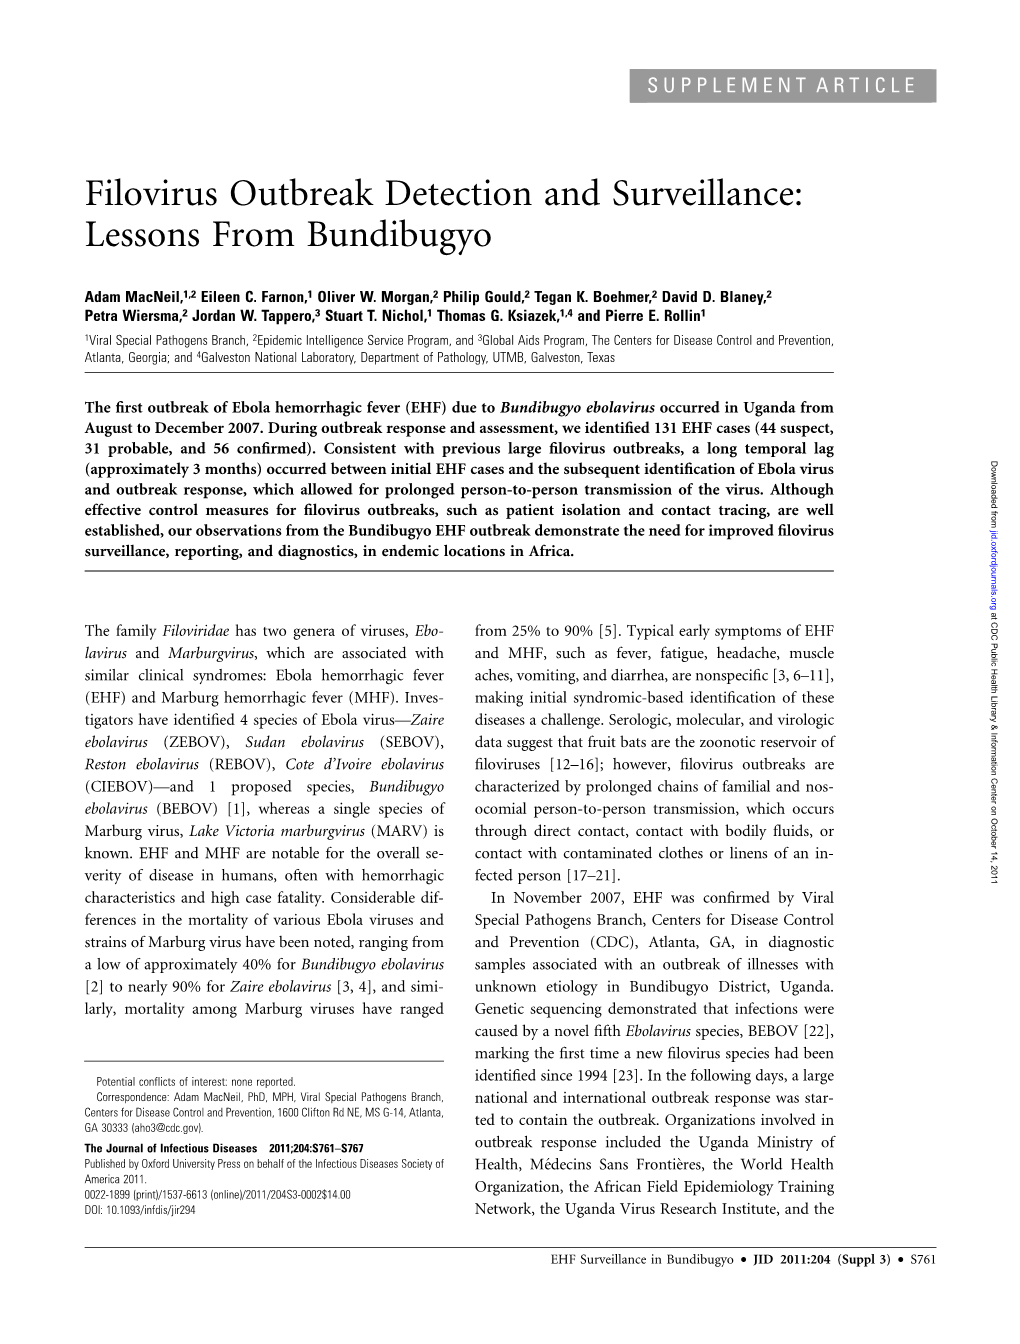 Filovirus Outbreak Detection and Surveillance: Lessons from Bundibugyo